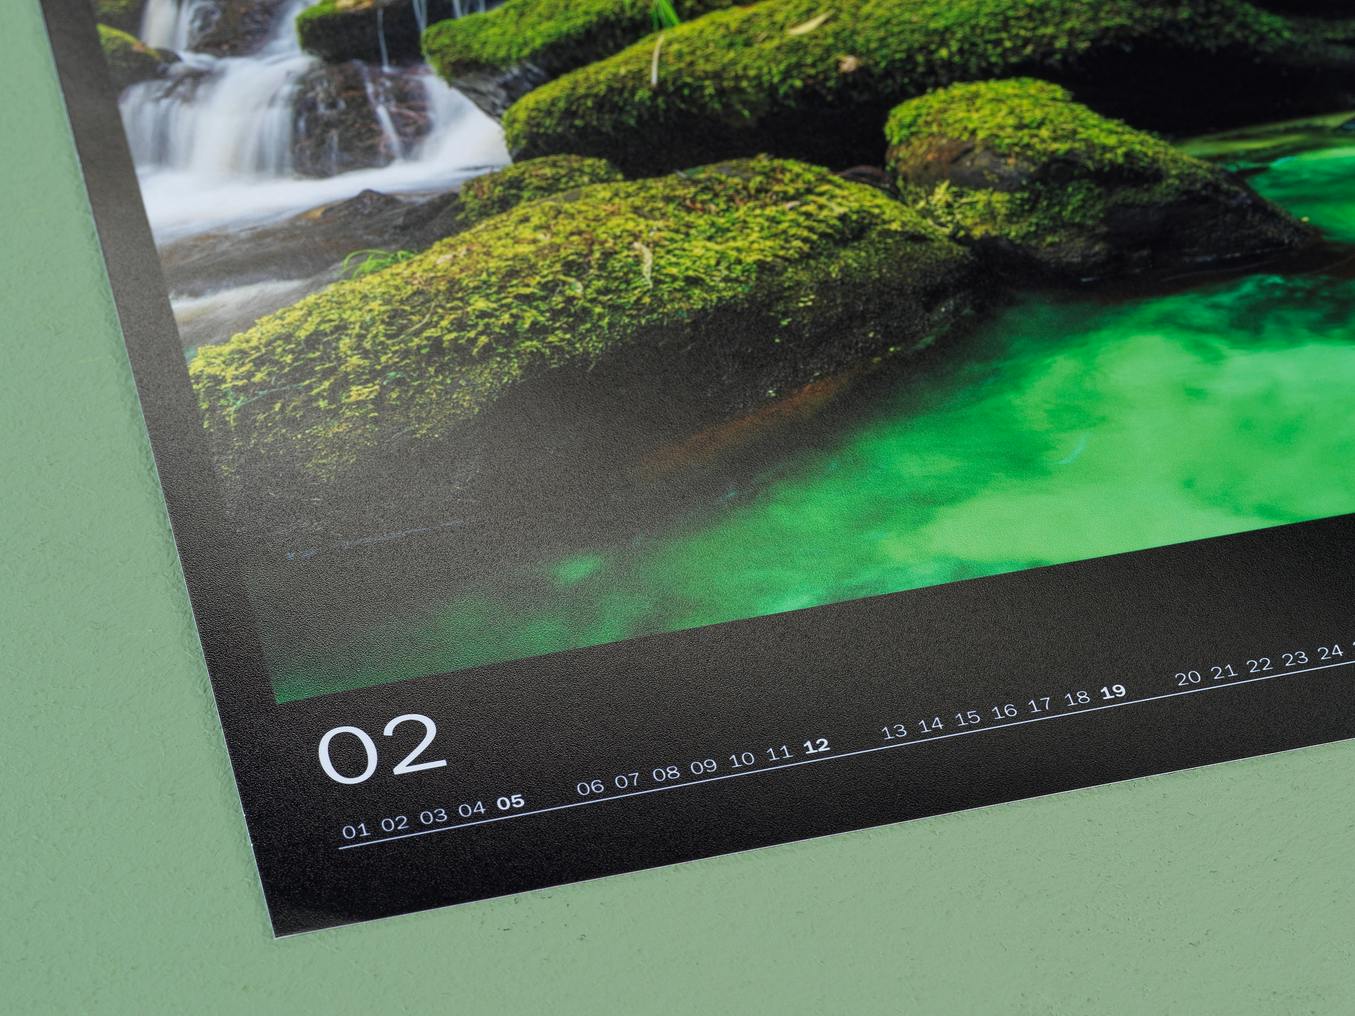 Detailed view of a photo calendar with photo paper matt